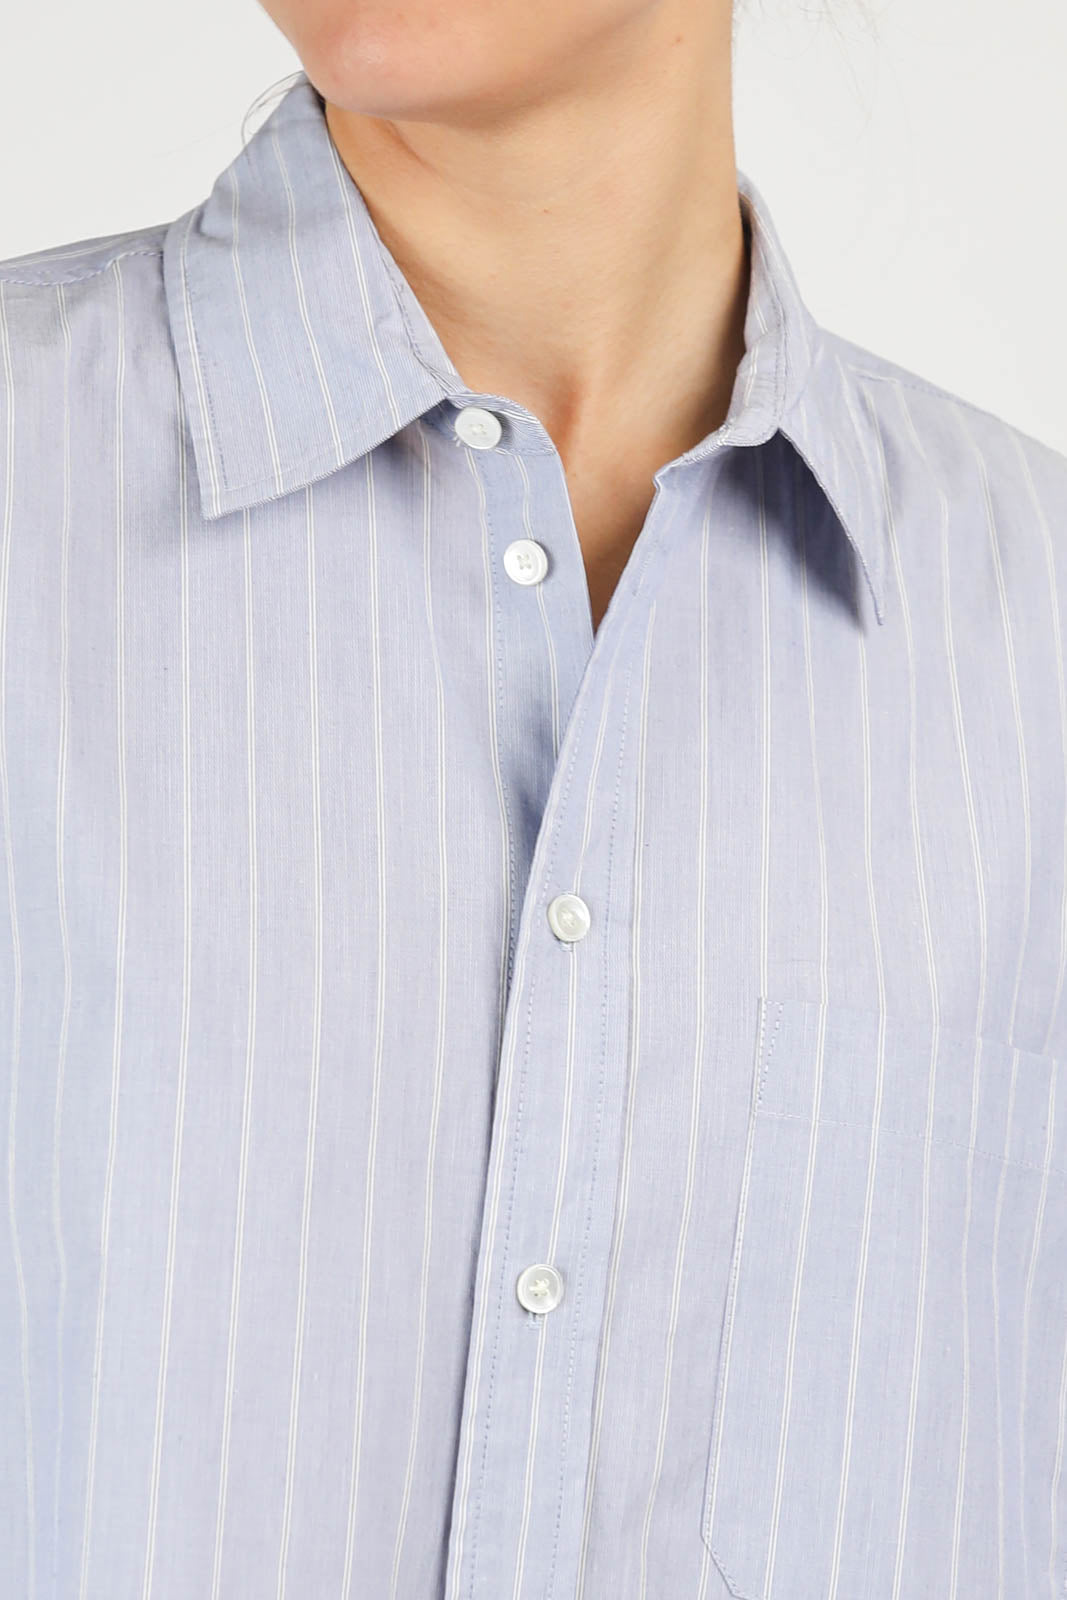 Bluse Uniform in Blue/White Stripe